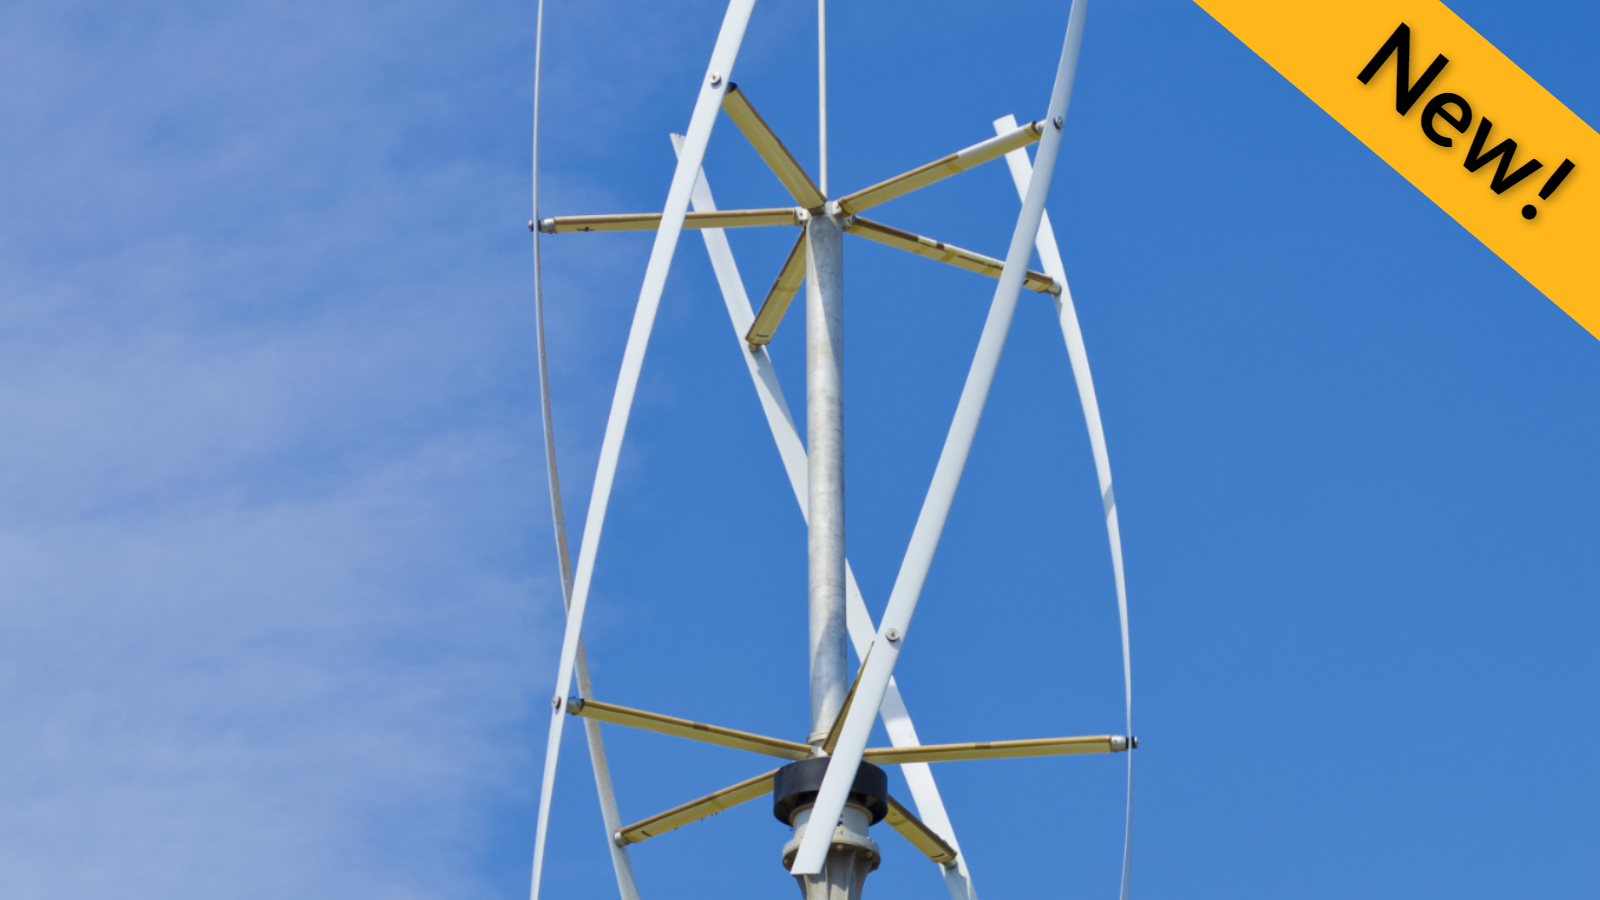 Vertical Axis Wind Turbine — Part 2